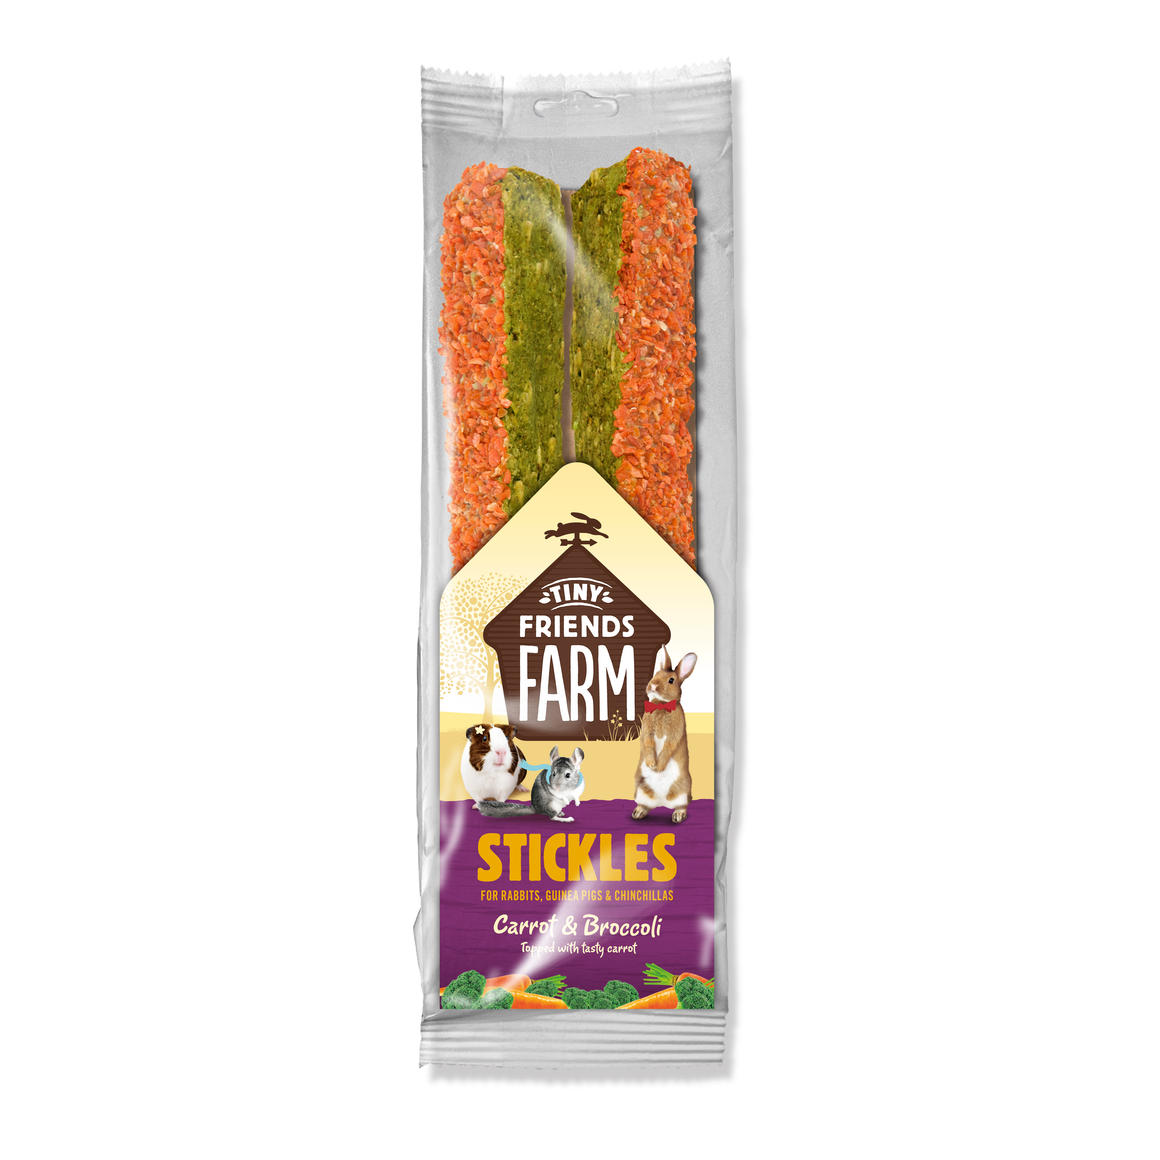 Tiny Friends Farm Carrot & Broccoli Stickles Treats